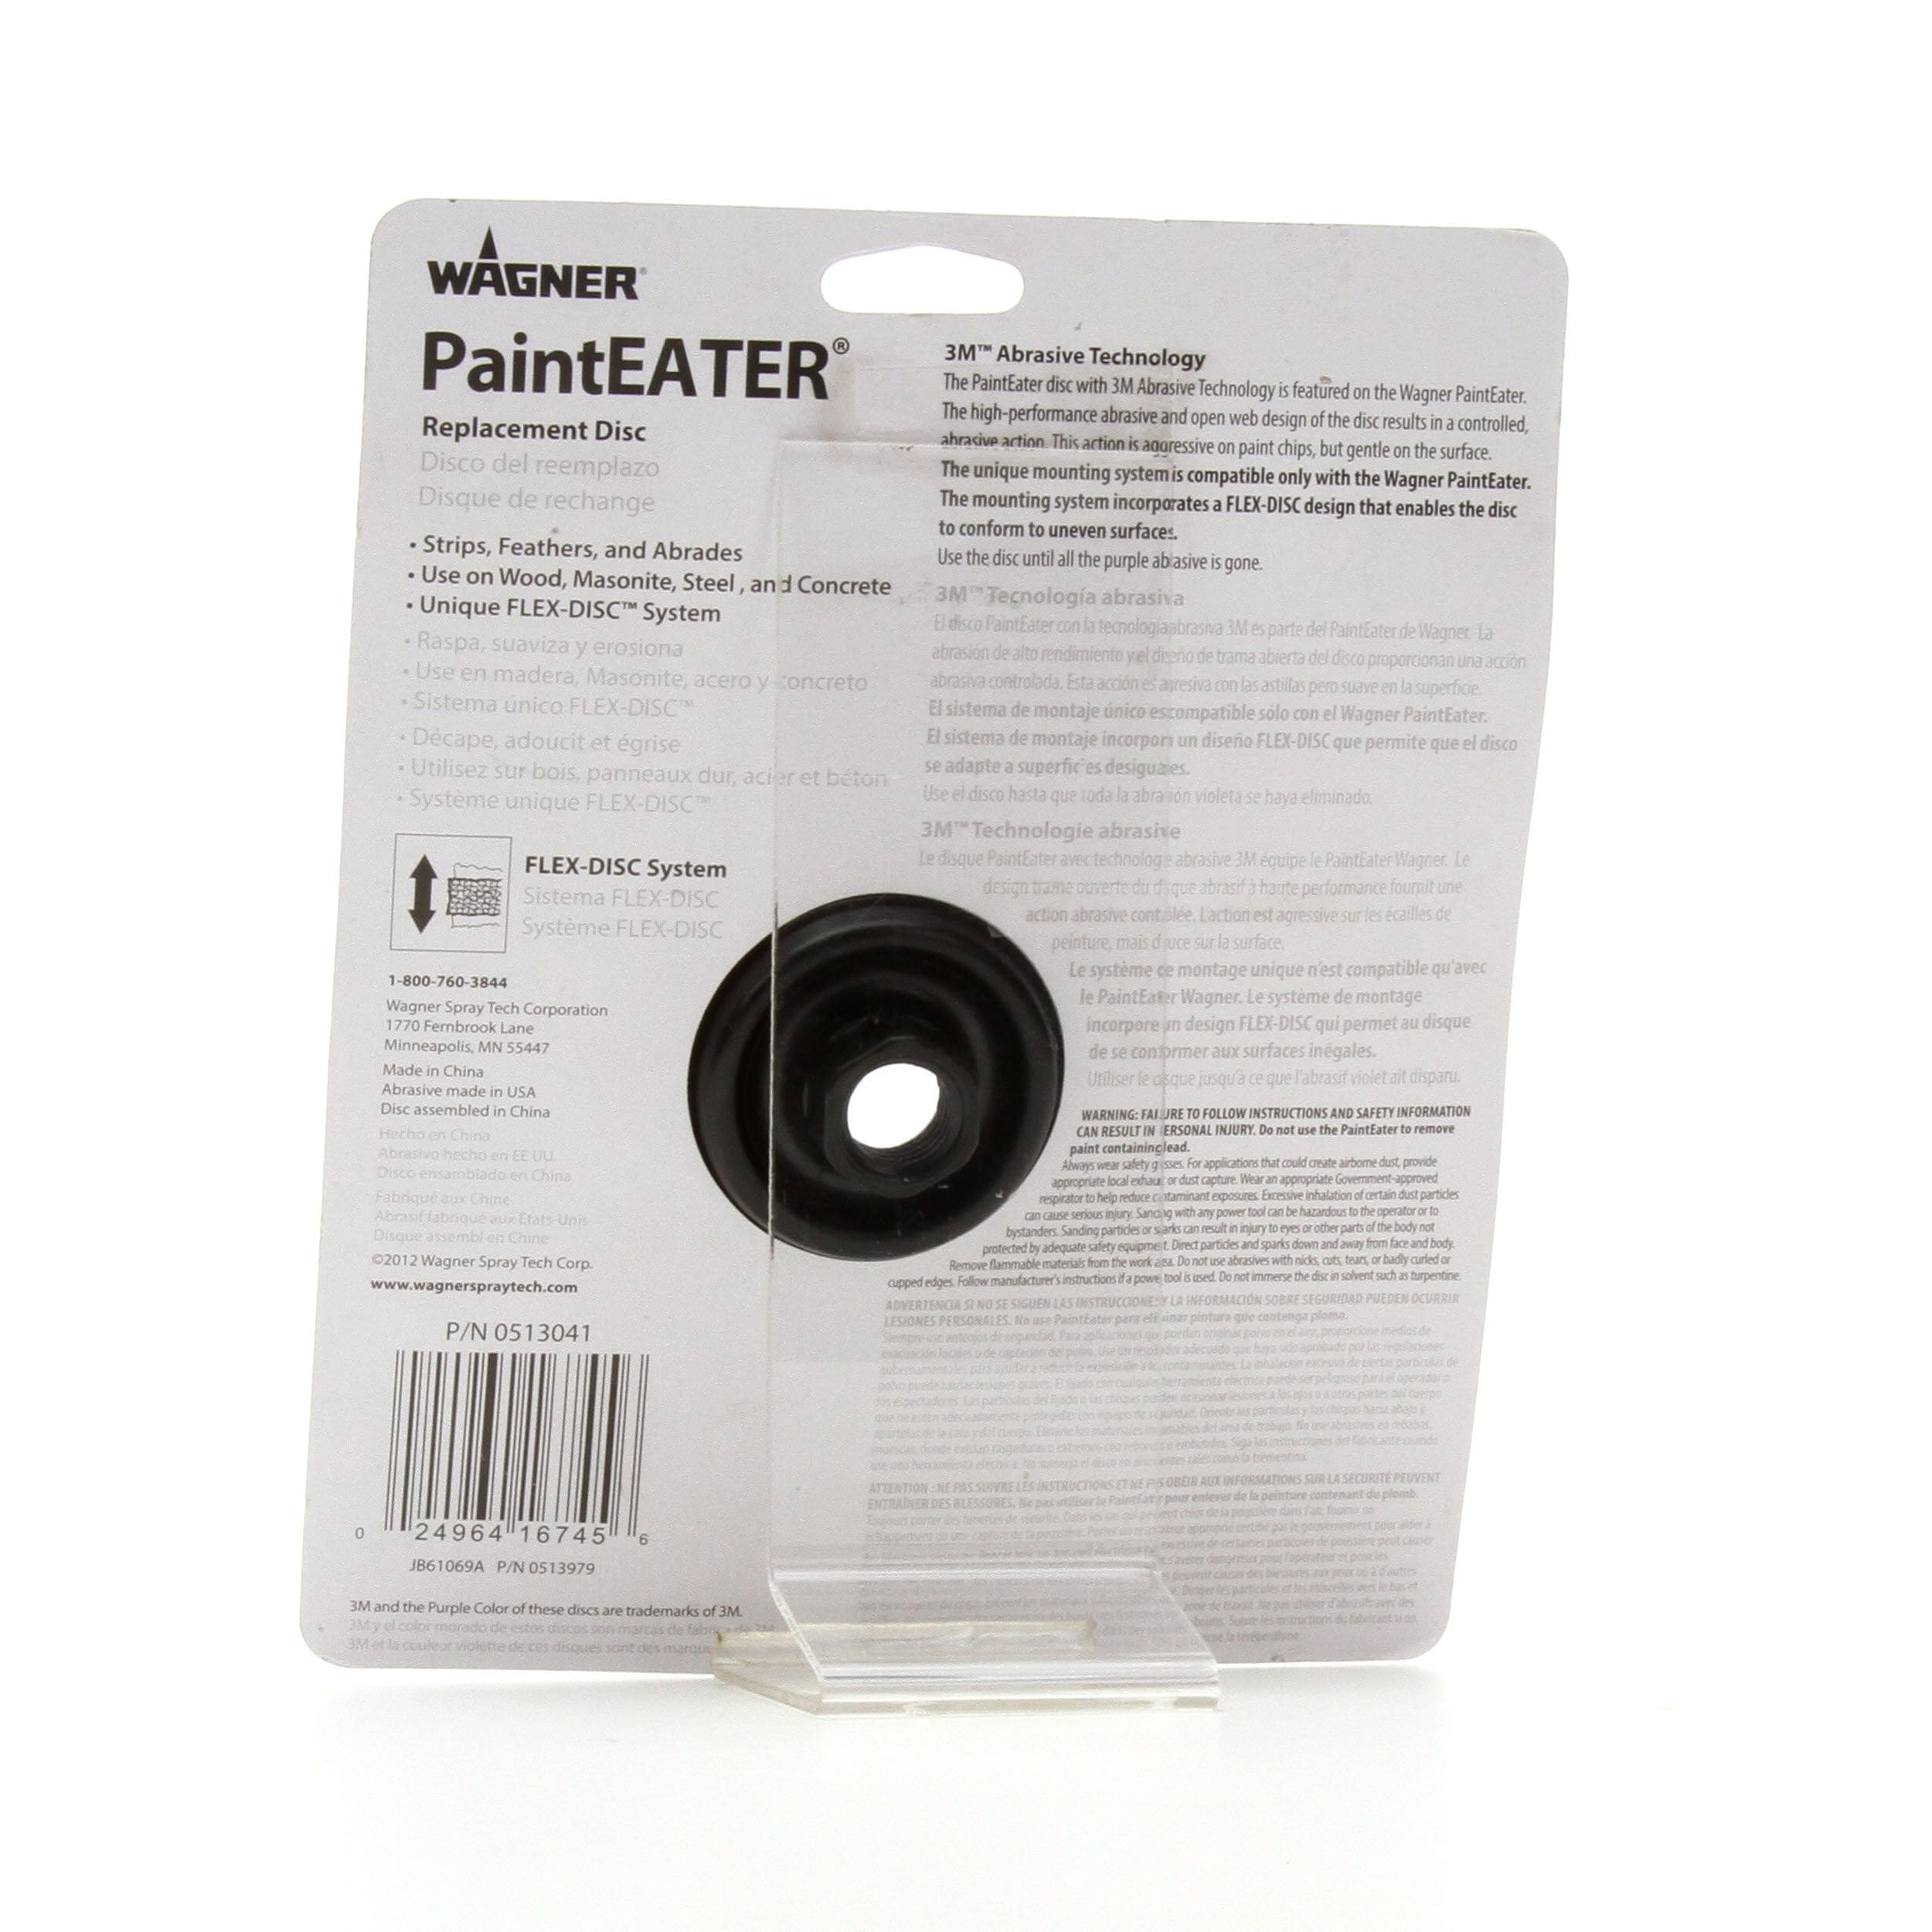 WAGNER Paint Eater Replacement Disc 4-1/2" Spun-Fiber Resists Clogging Flex-Disc 